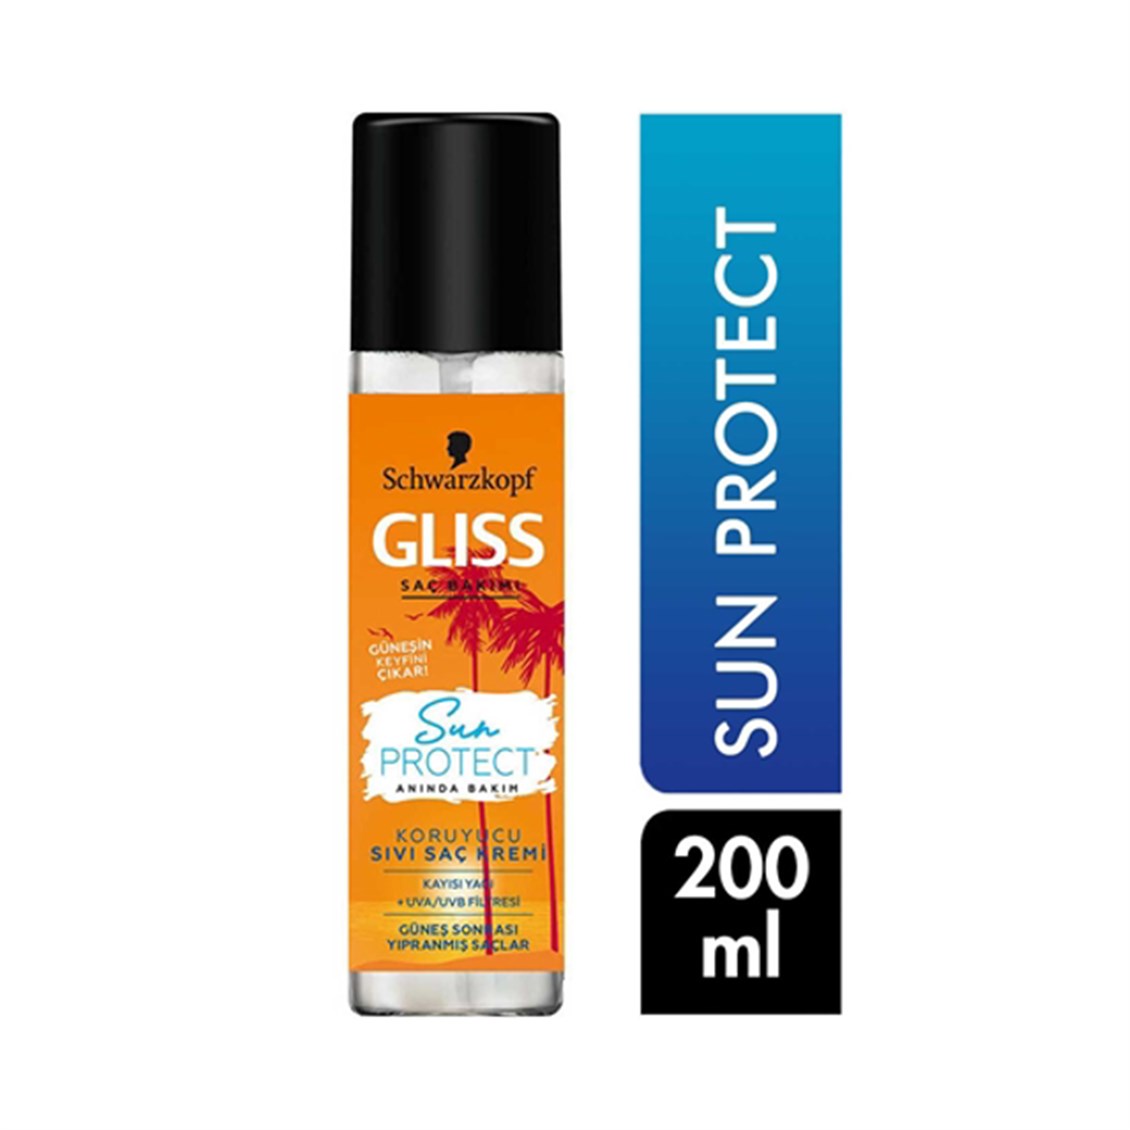 Gliss Sun Protect Sıvı Saç Kremi 200 ml - Onur Market